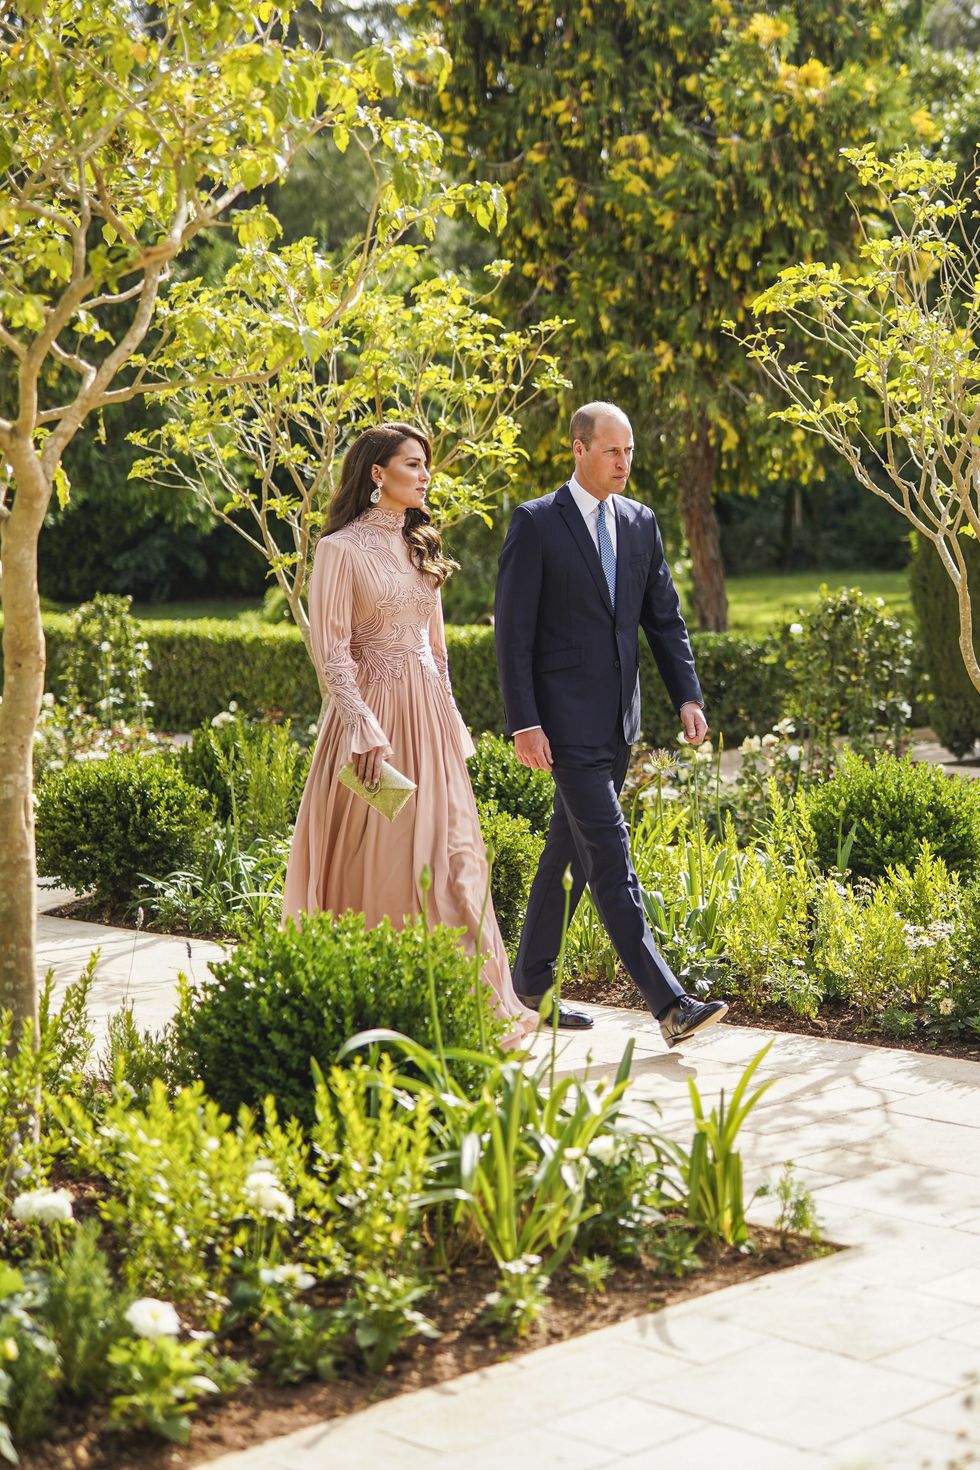 Prince William and Kate at the royal Jordanian wedding.